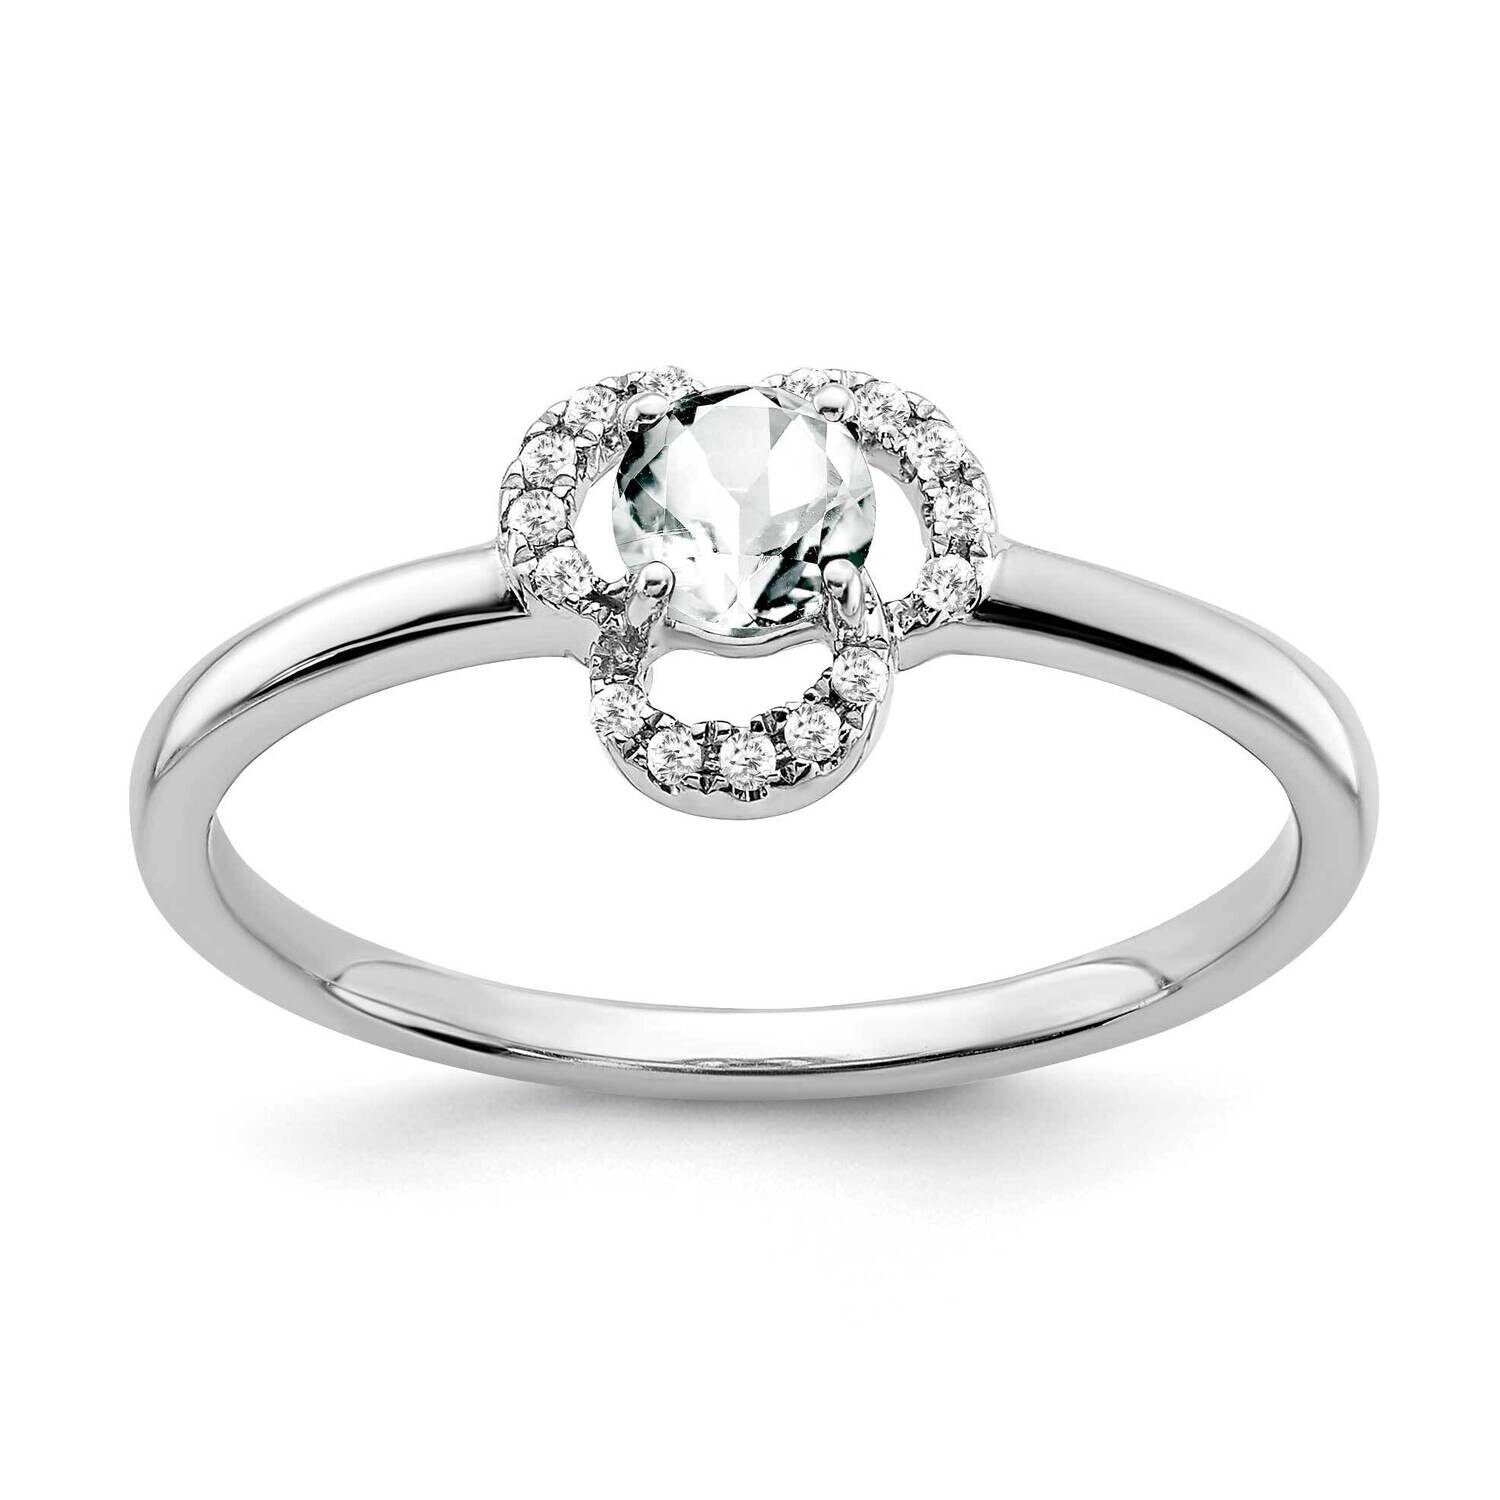 White Topaz Diamond Ring 10k White Gold RM3578-WT-006-1WA